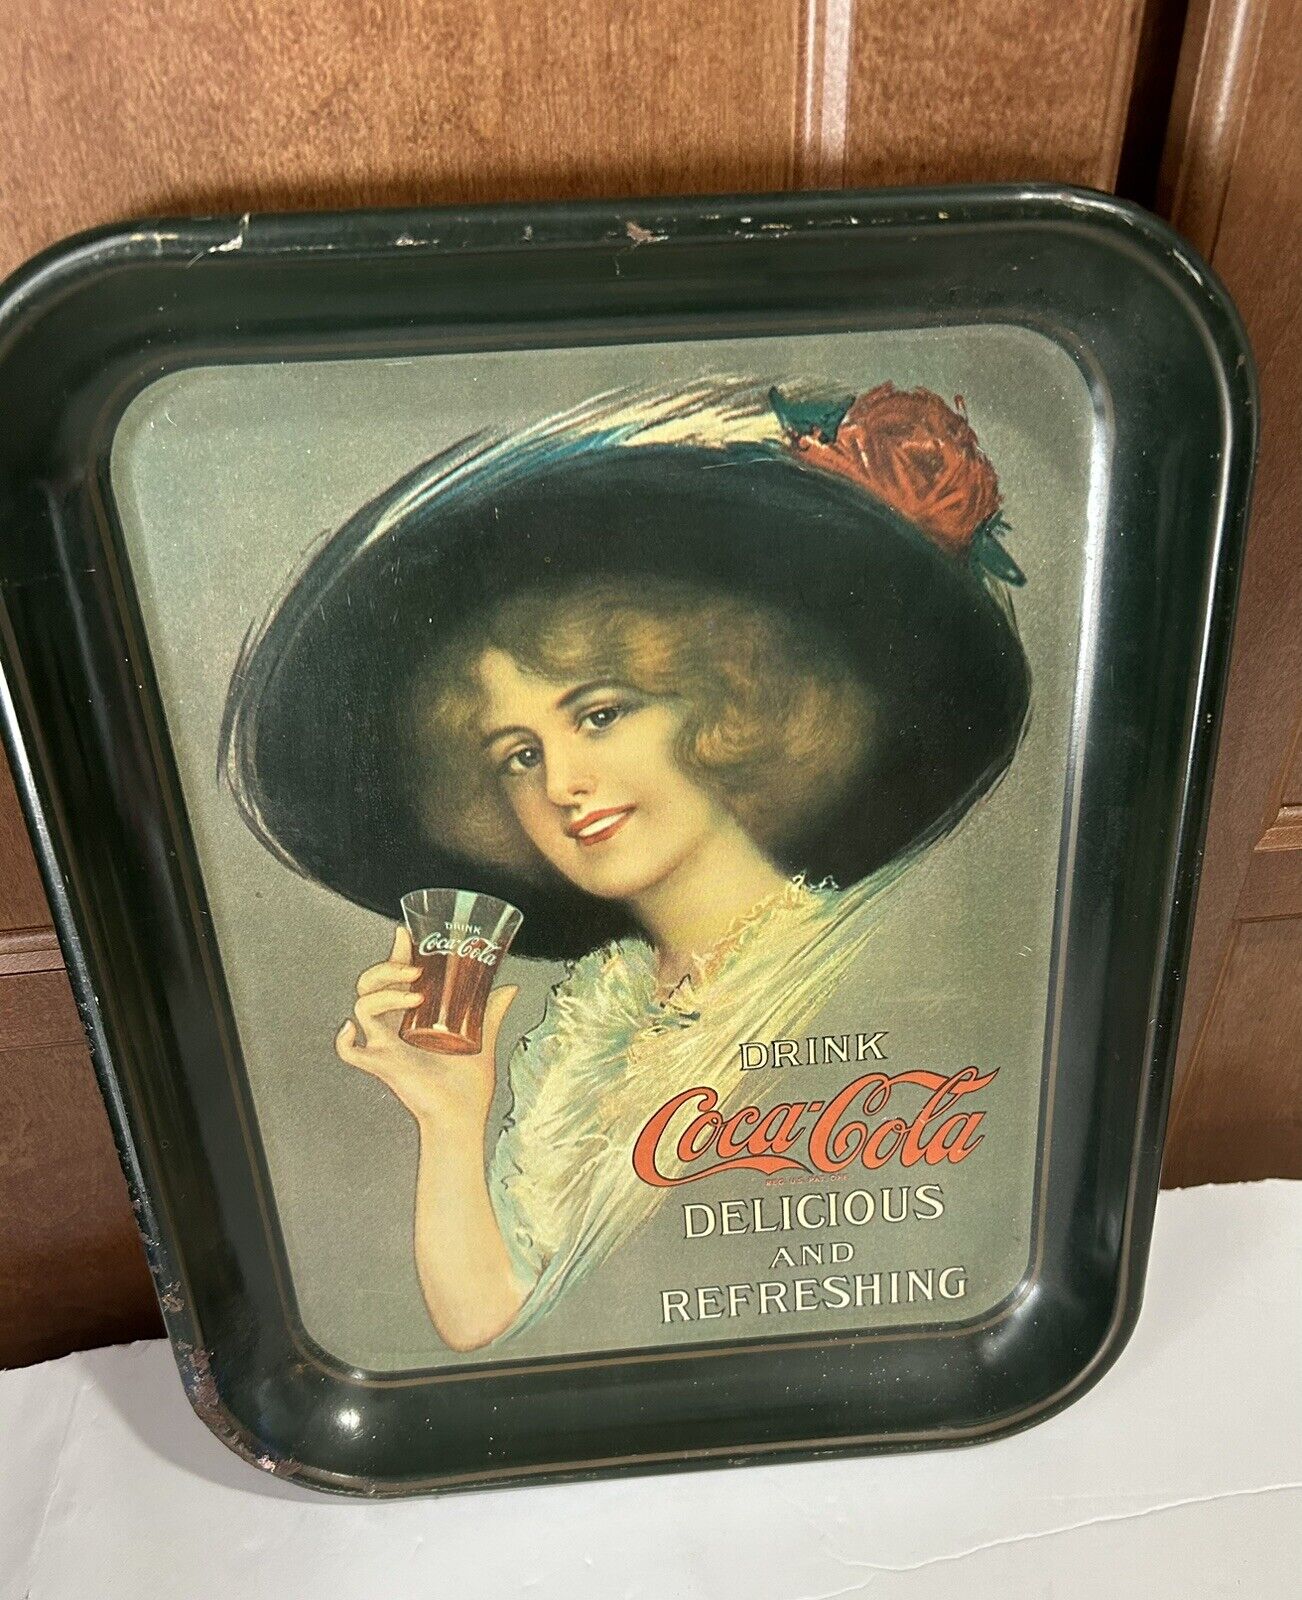 Coca Cola Hamilton King Girl 1972 Vintage Metal Collectible Coke Serving Tray